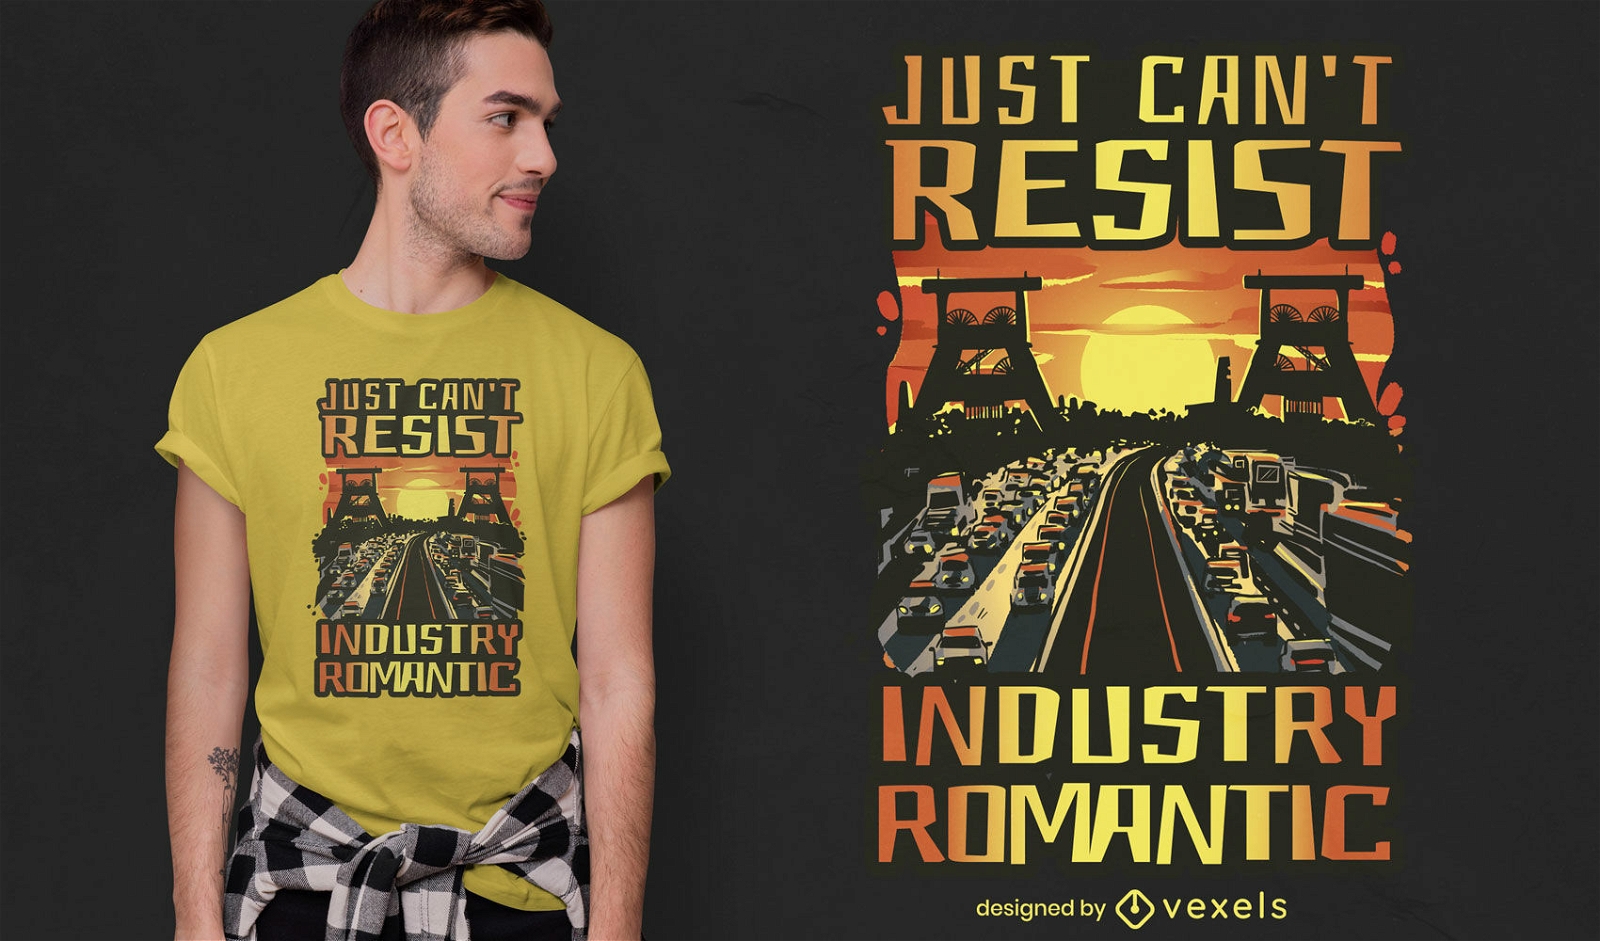 Industry romantic t-shirt design